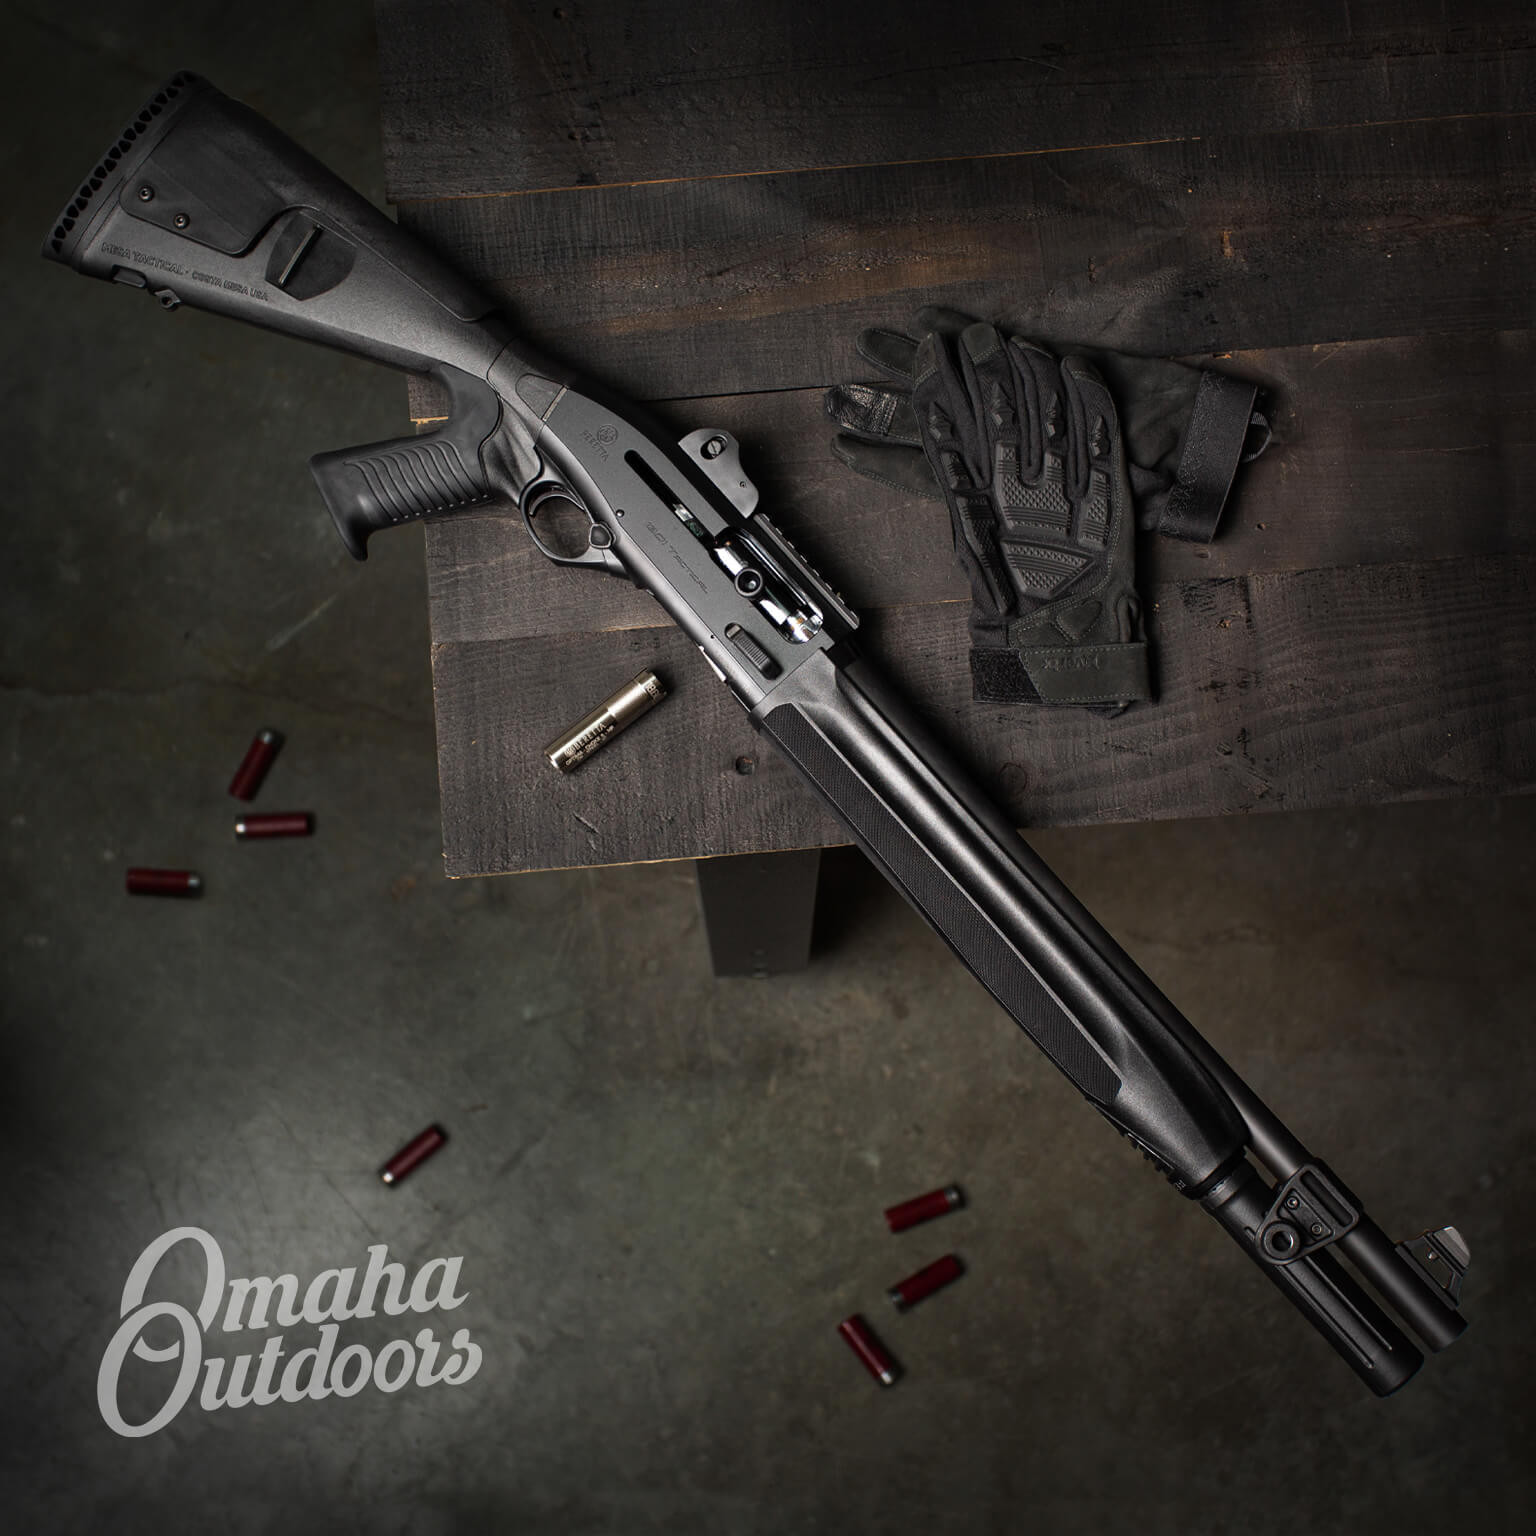 J131tp18c Beretta 1301 Tactical Pistol Grip Shotgun Omaha Outdoors